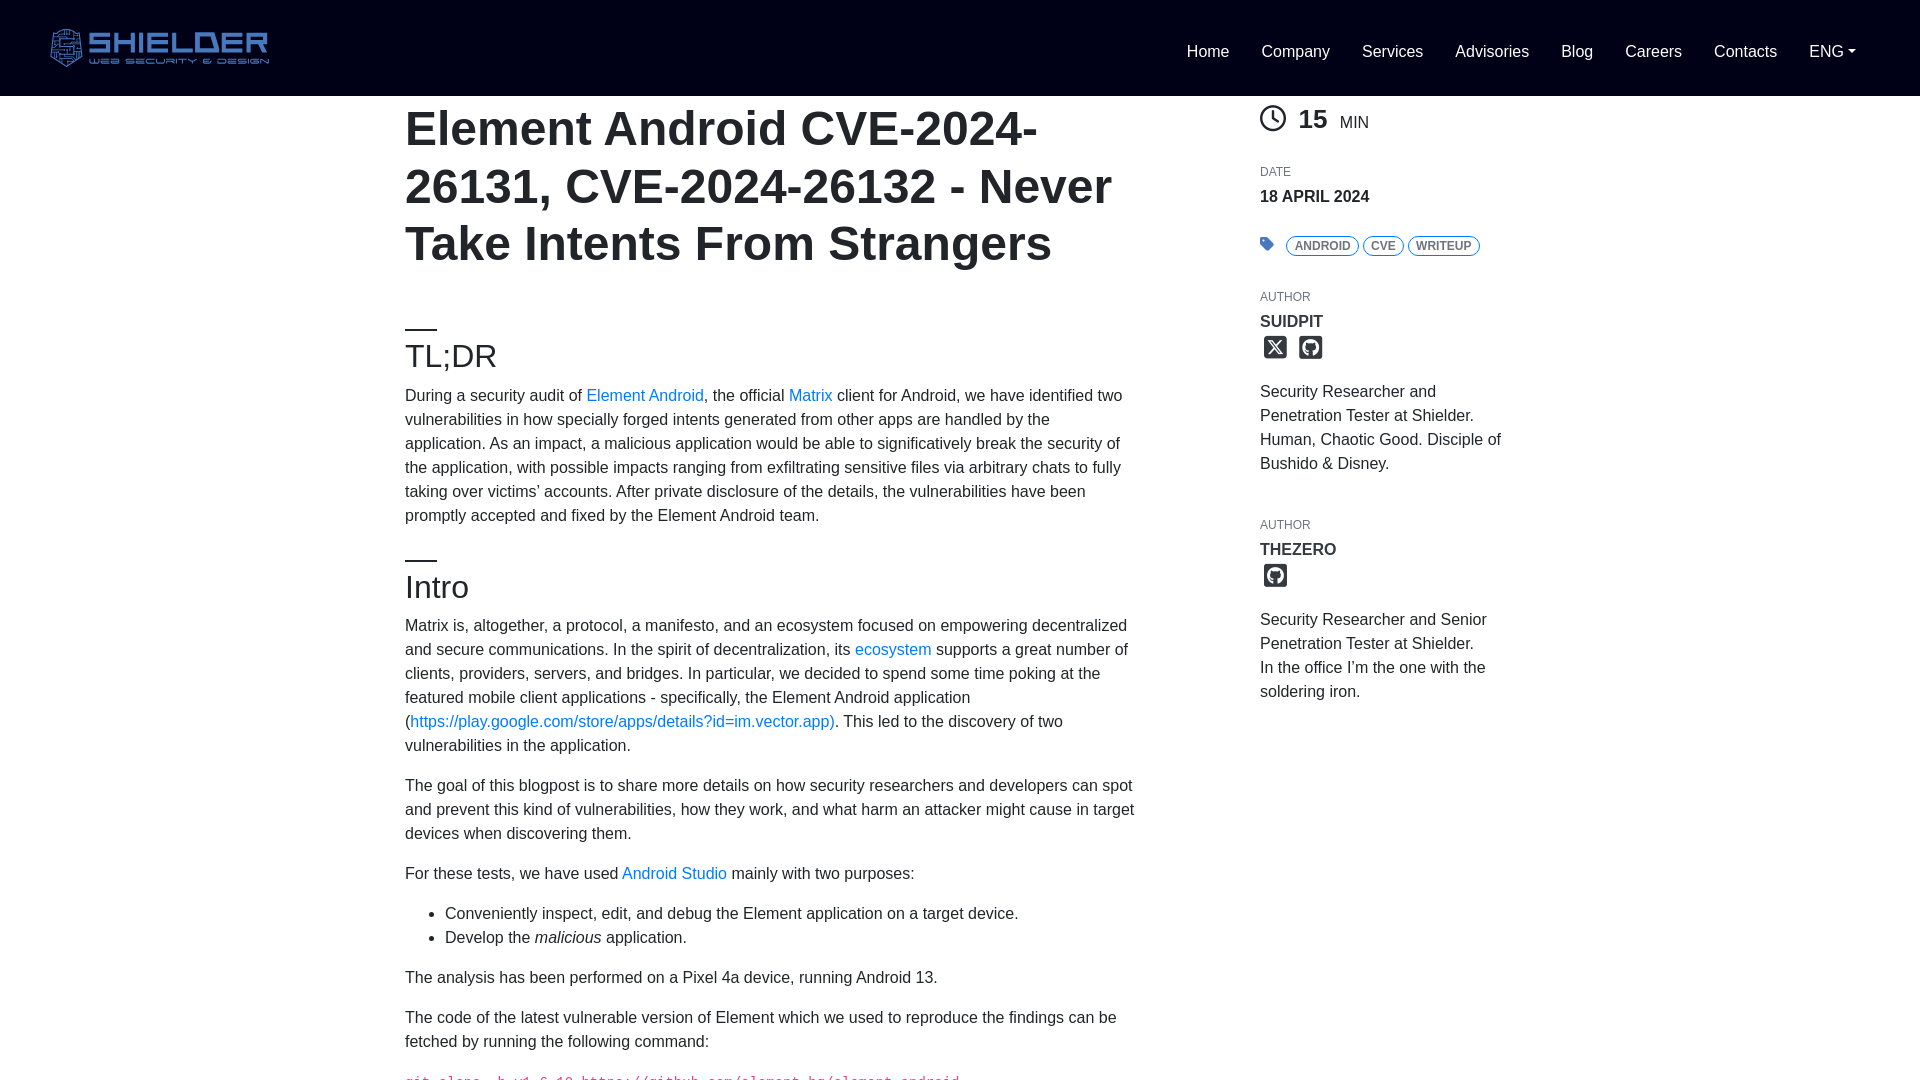 Shielder - Element Android CVE-2024-26131, CVE-2024-26132 - Never Take Intents From Strangers